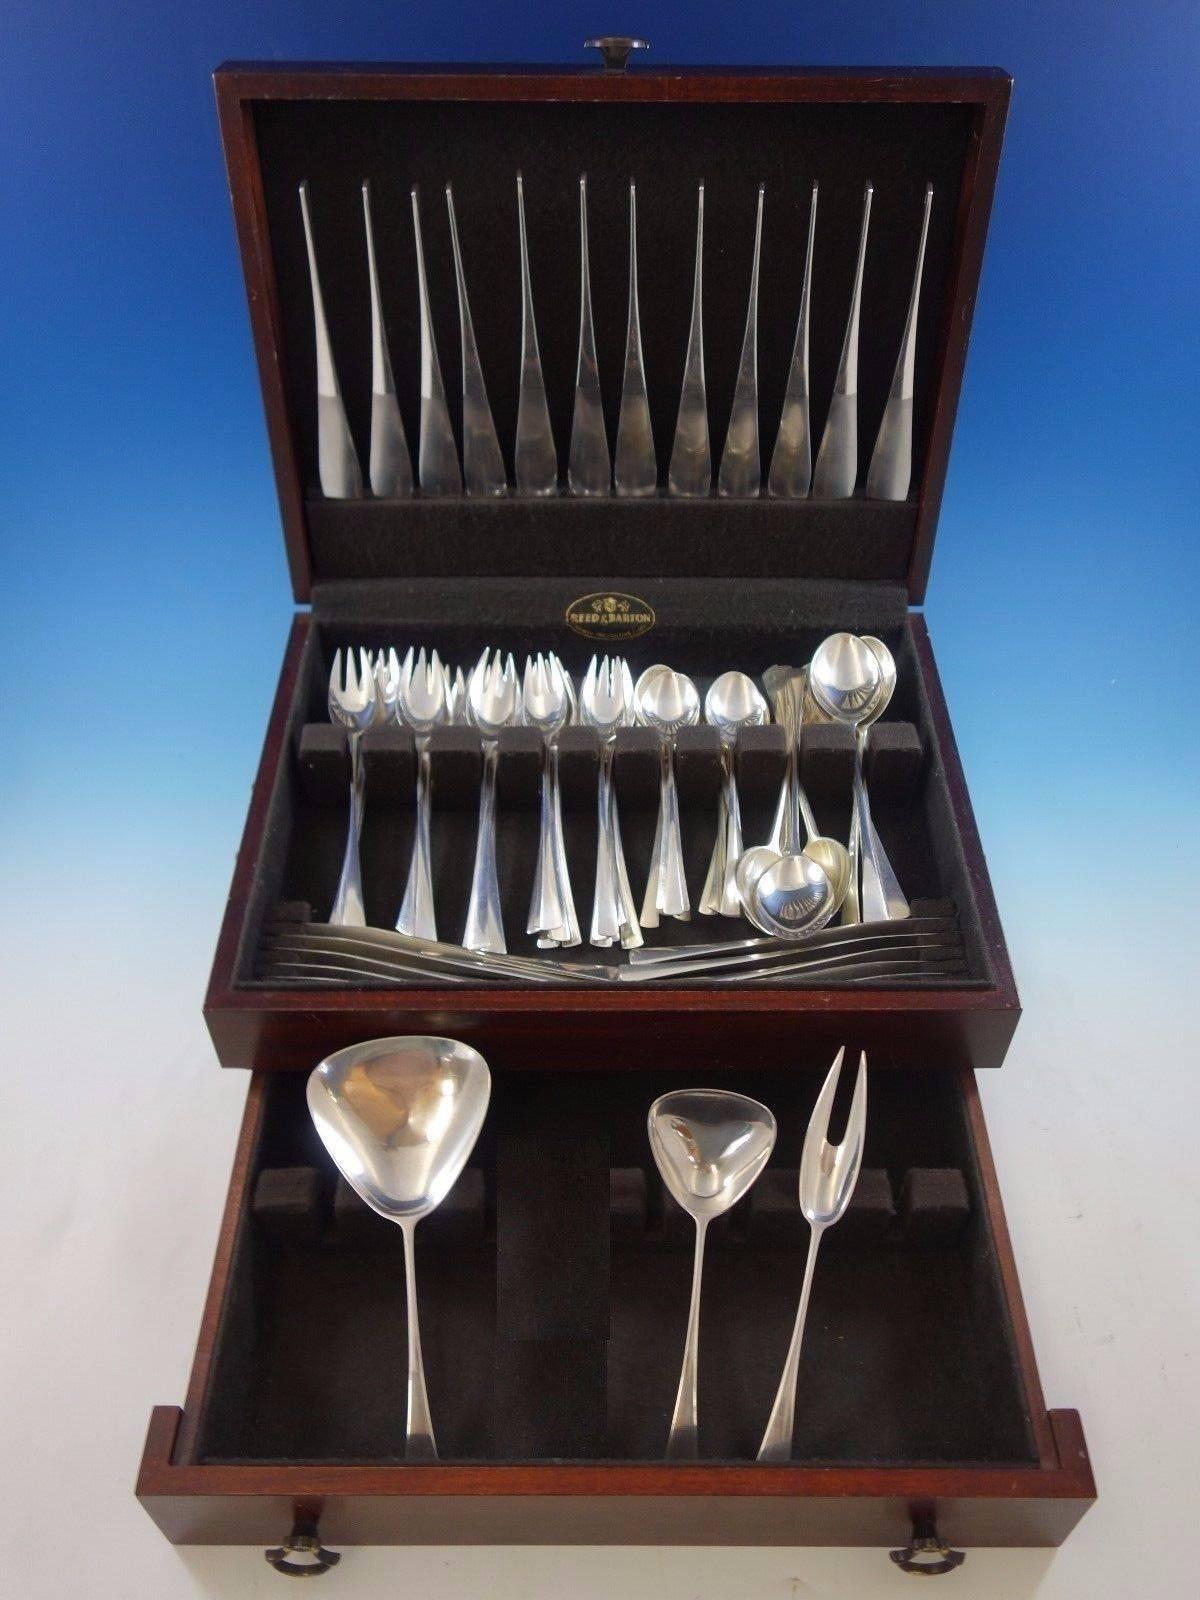 Tjorn by Dansk sterling silver flatware set, 75 pieces. This set includes: 12 dinner knives, 8 1/2", 12 dinner forks, 7 1/2", 12 salad forks, 6 7/8" , 12 teaspoons, 6", 12 place soup spoons, 7 1/2", 12 flat handle butter